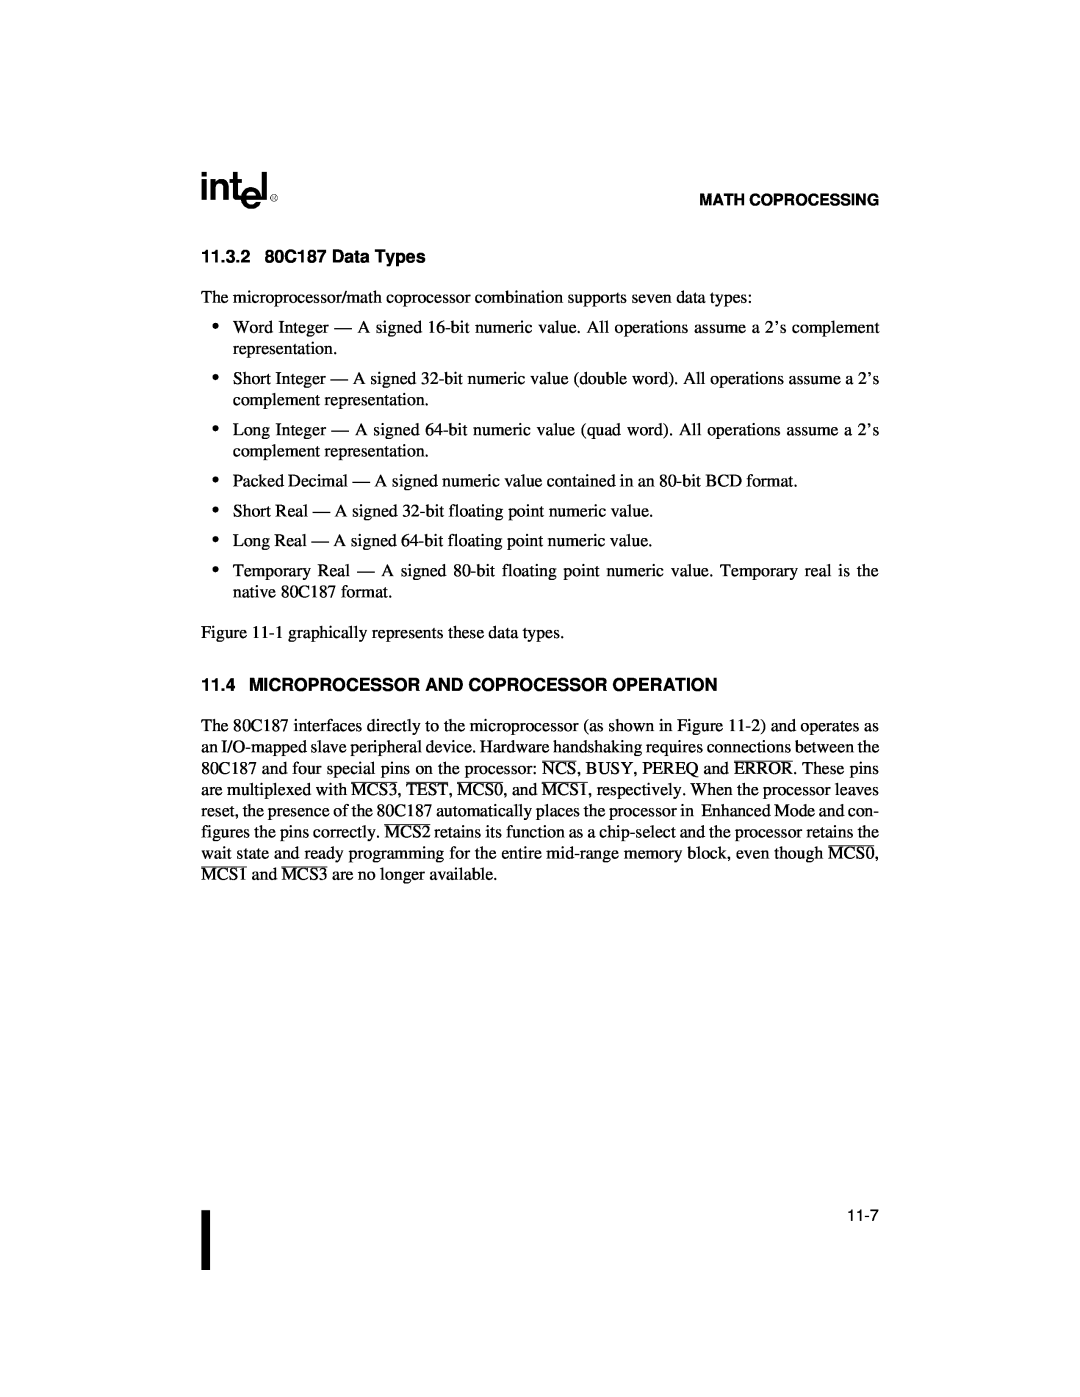 Intel 80C188XL, 80C186XL user manual 11.3.2 80C187 Data Types, Microprocessor And Coprocessor Operation 